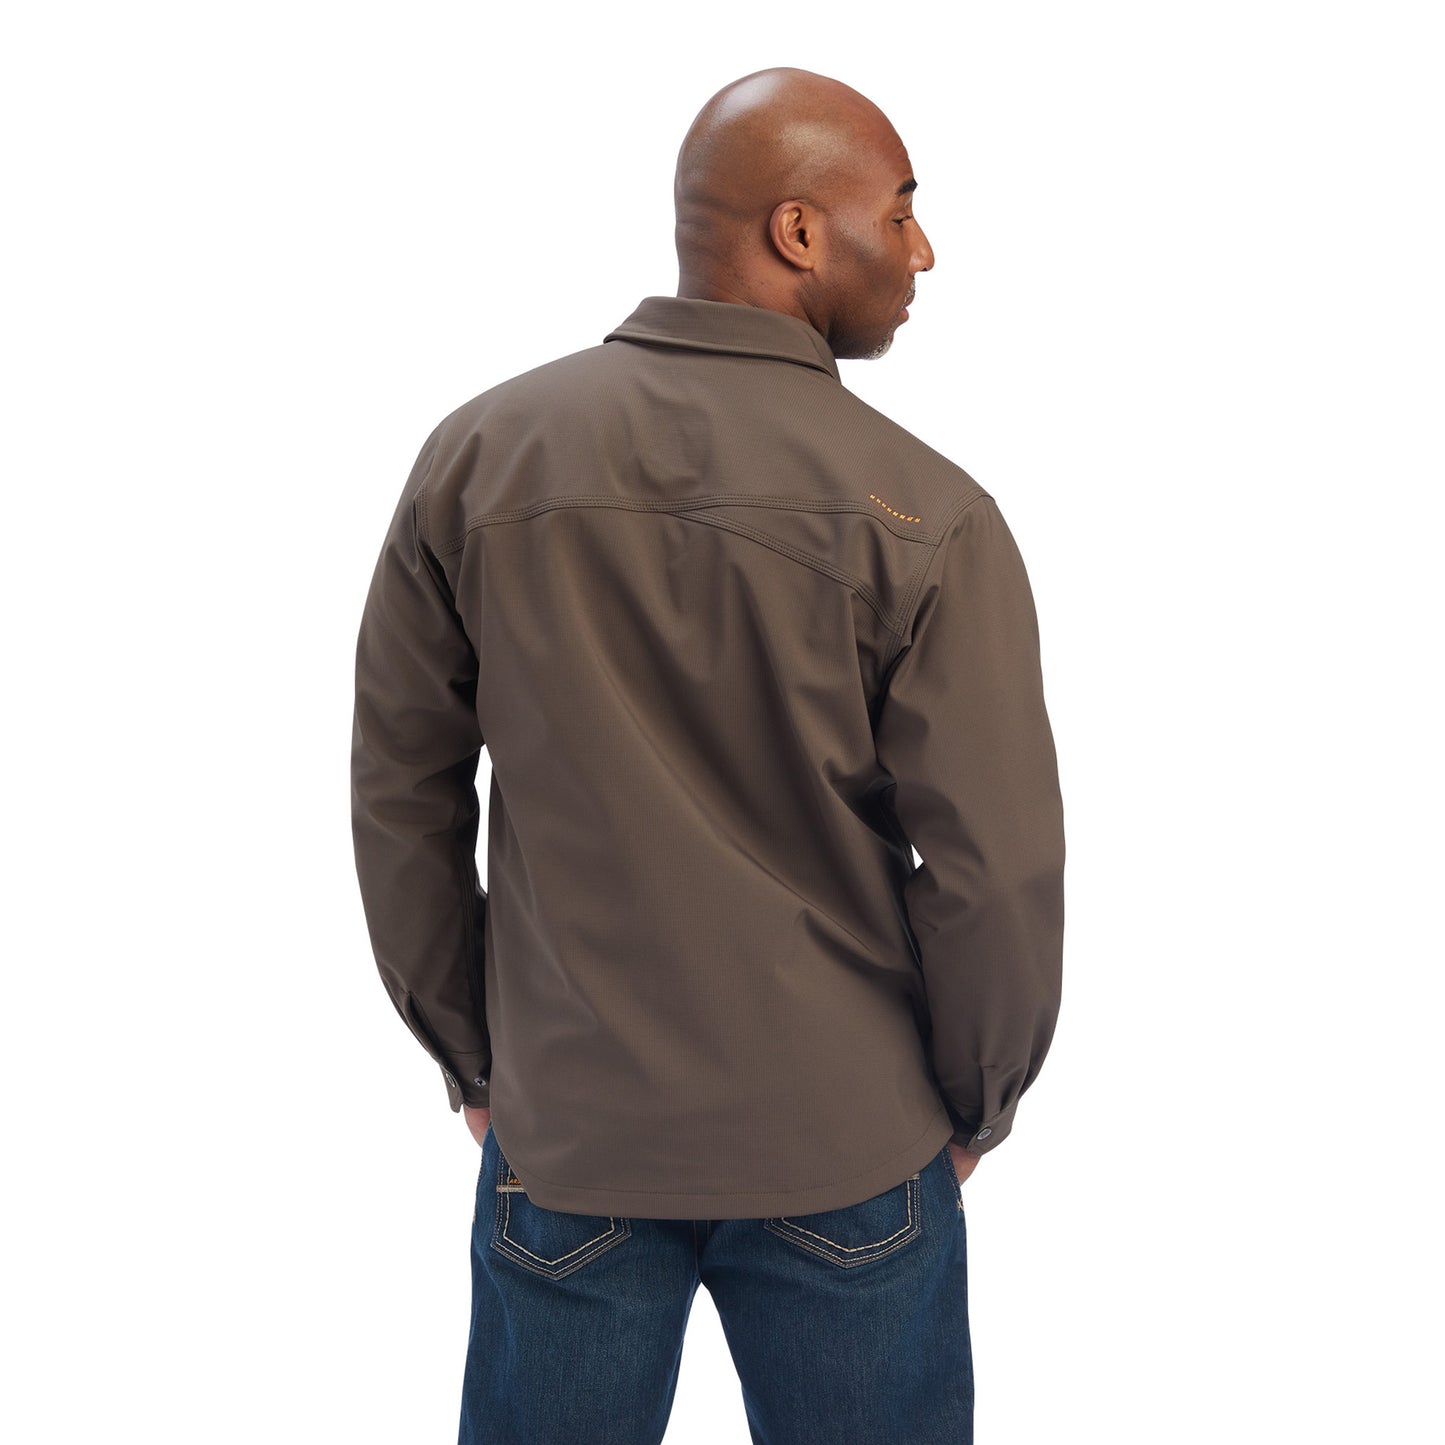 Ariat® Men's Rebar DuraStretch Utility Wren Brown Shirt Jacket 10041696